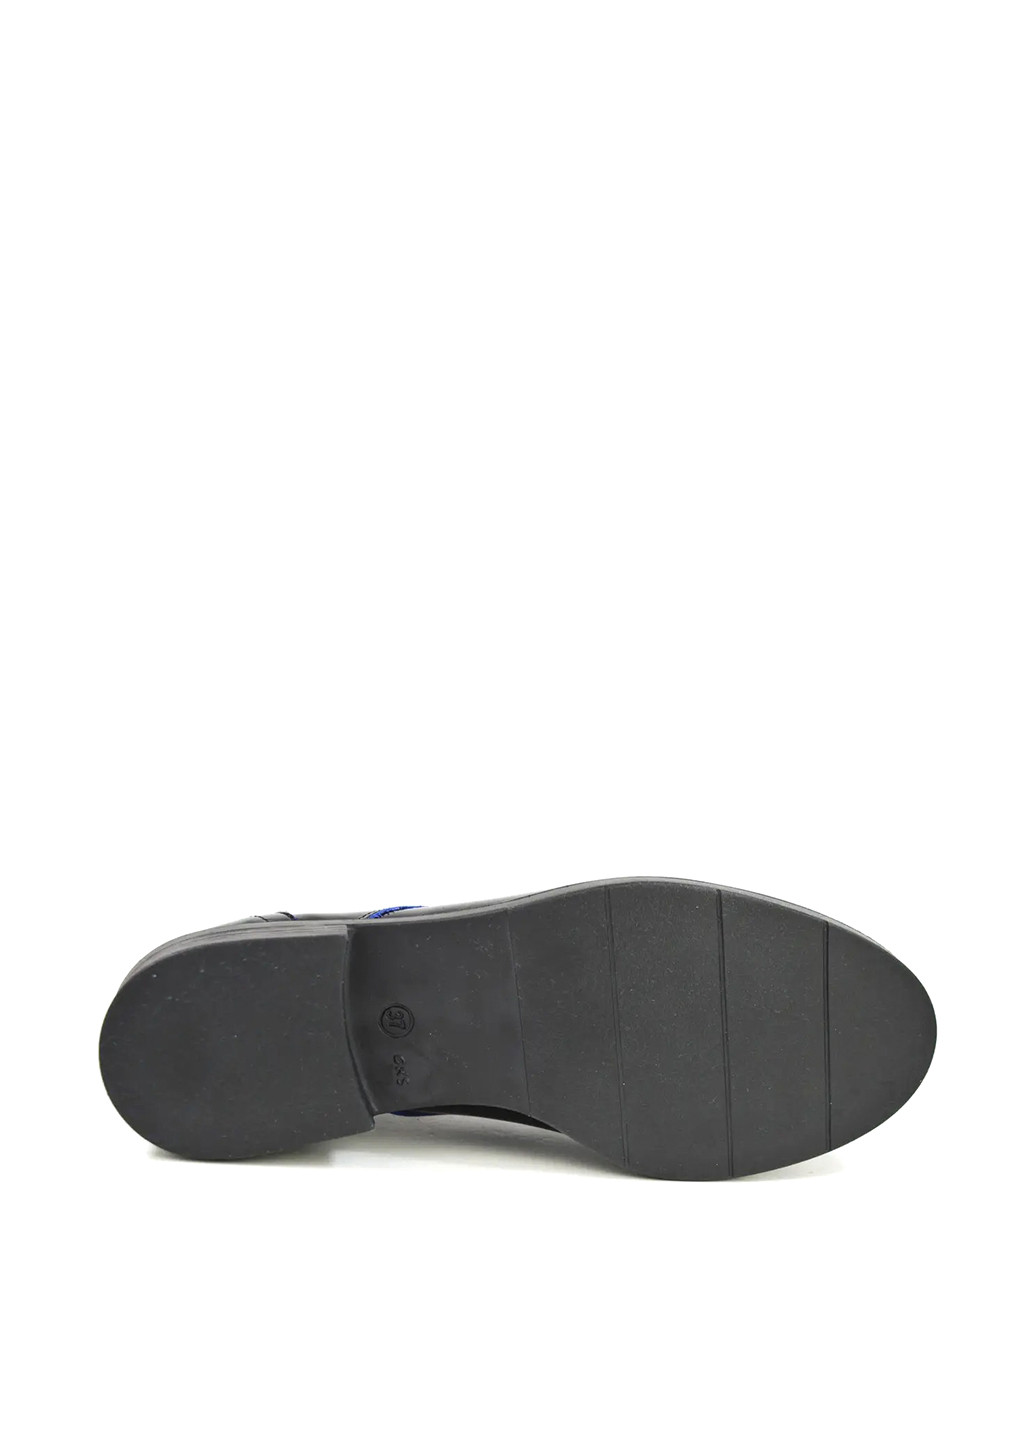 Туфли Evromoda на низком каблуке с пуговицами, лаковые